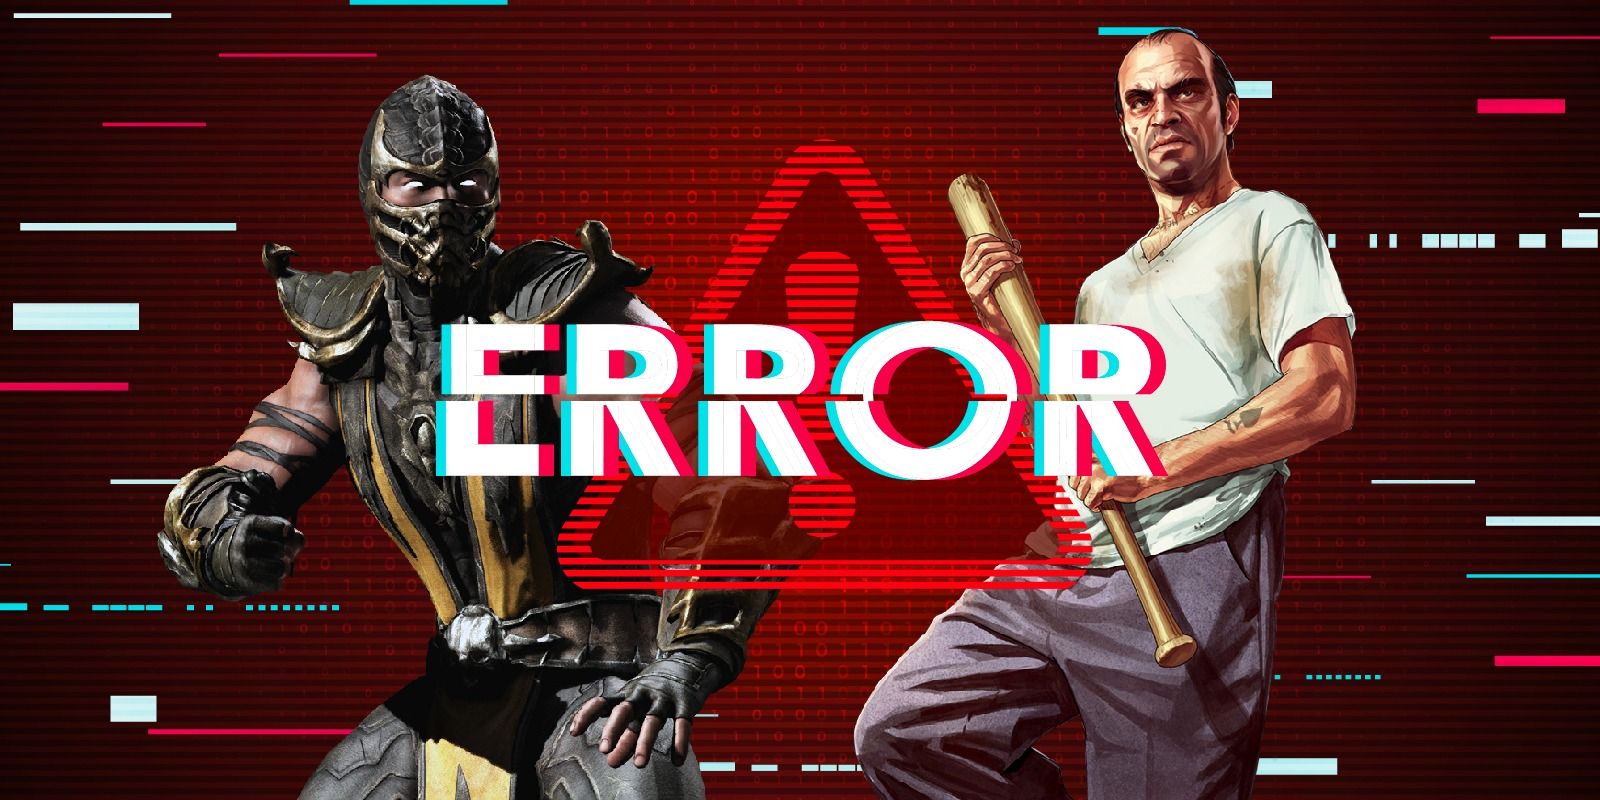 Scorpion de Mortal Kombat et Trevor Phillips de GTA 5 posent devant un écran d'erreur informatique